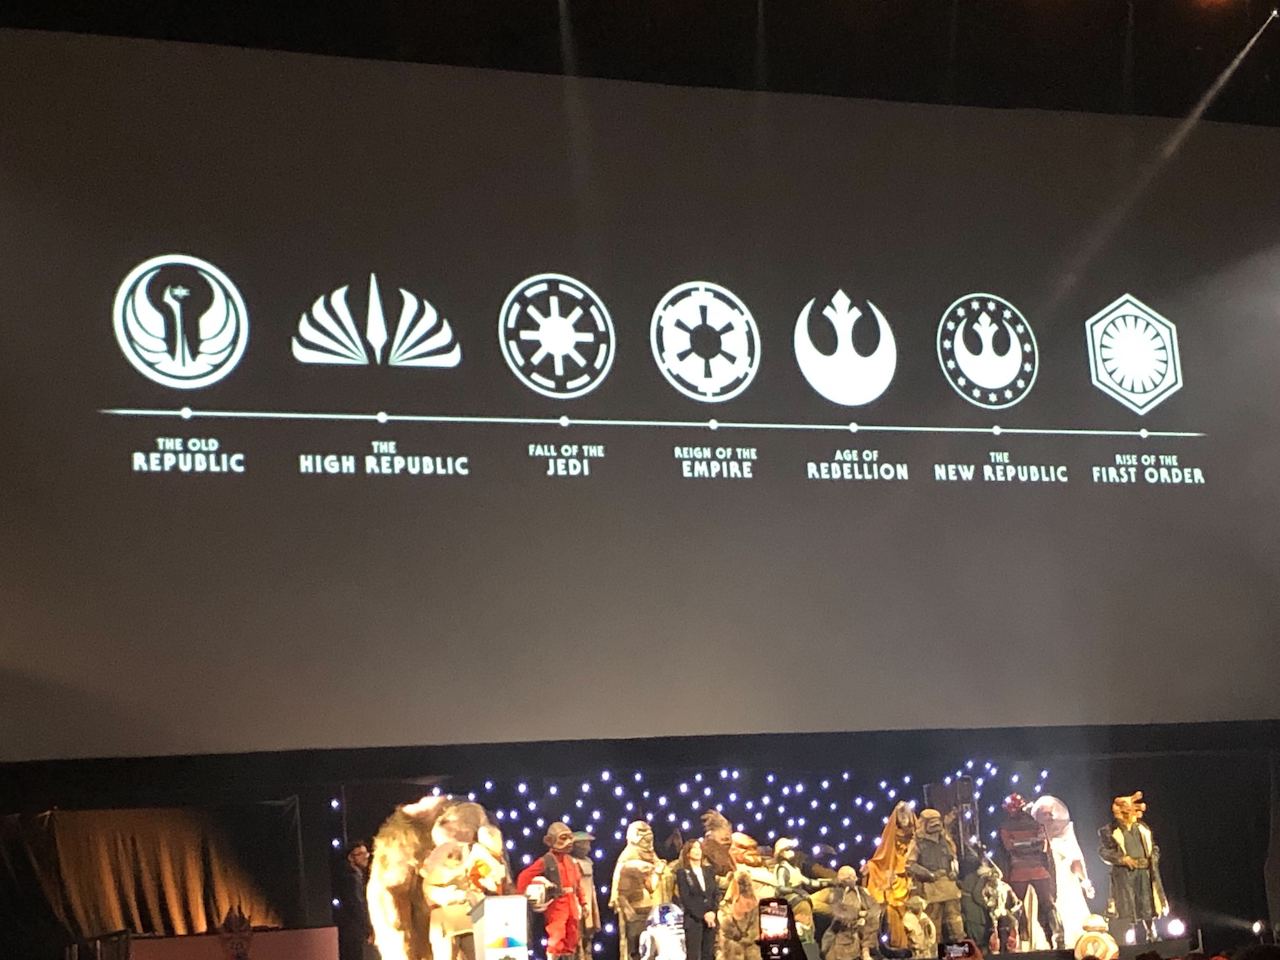 Star Wars movie titles from Star Wars Celebration